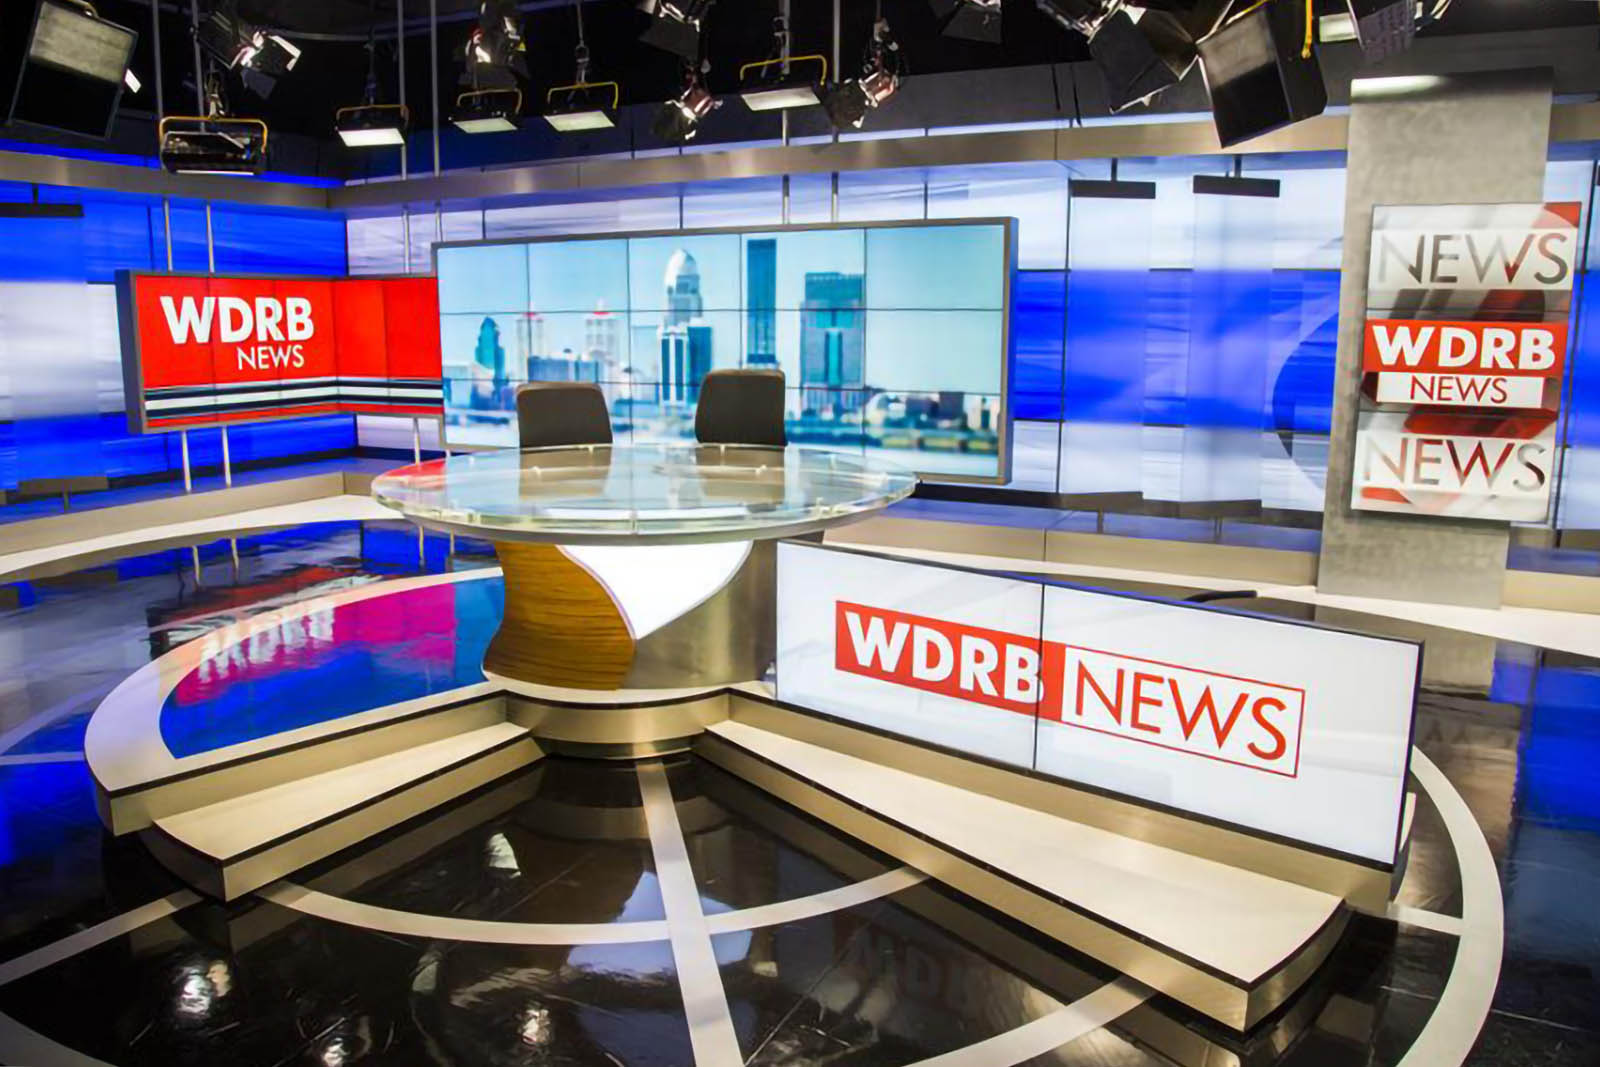 Live Coverage Studio WDRB News 